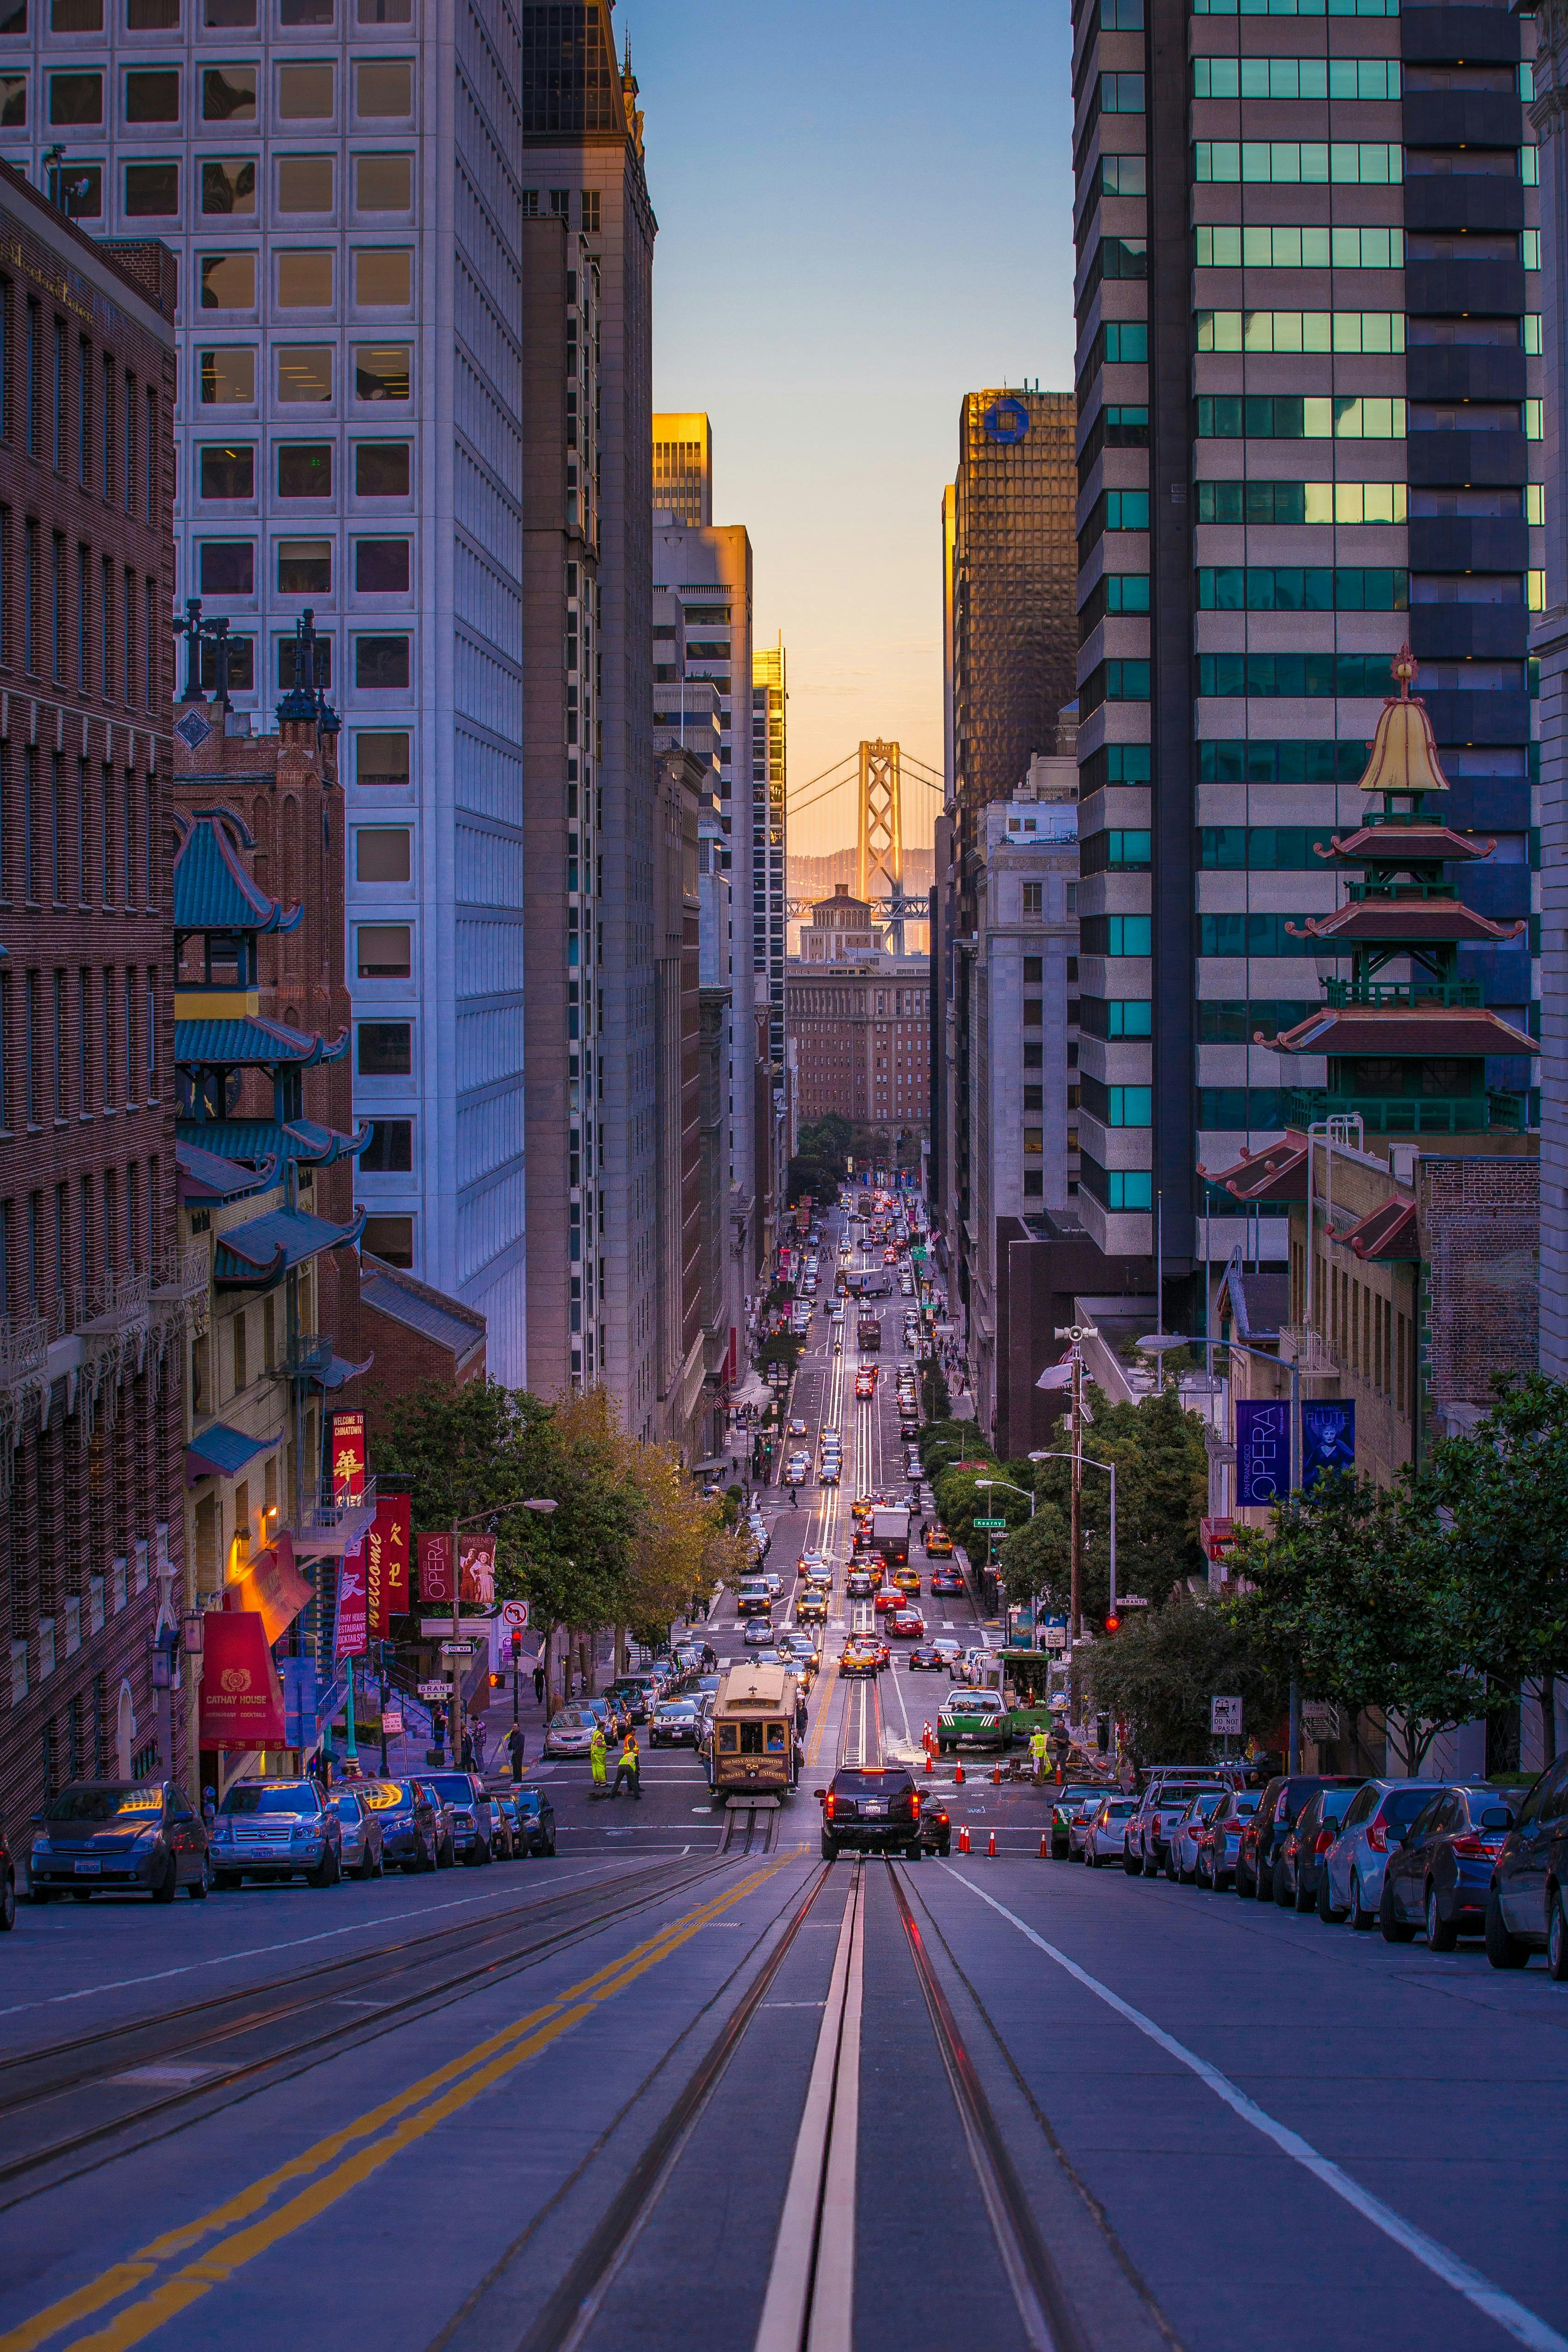 The California Street in San Francisco. Photo from Rezaul Karim on Unsplash